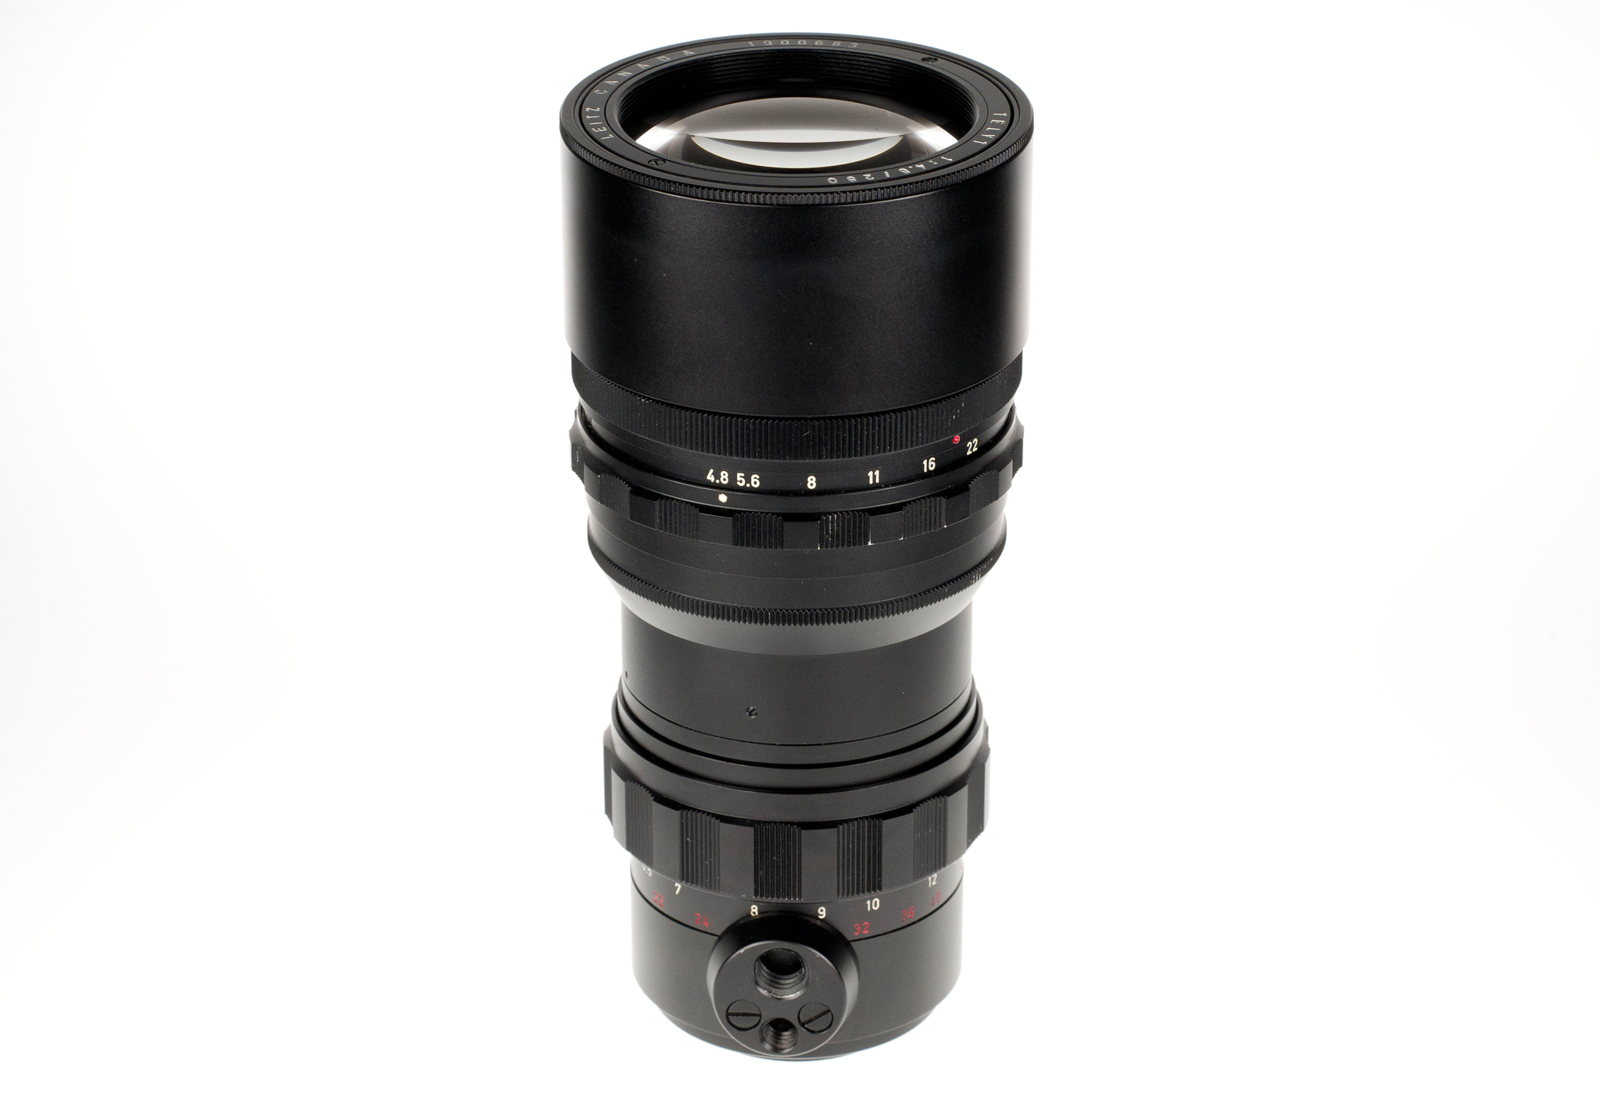 Leica MDa, chrome + Telyt 1:4,8/280mm, black + Visoflex II